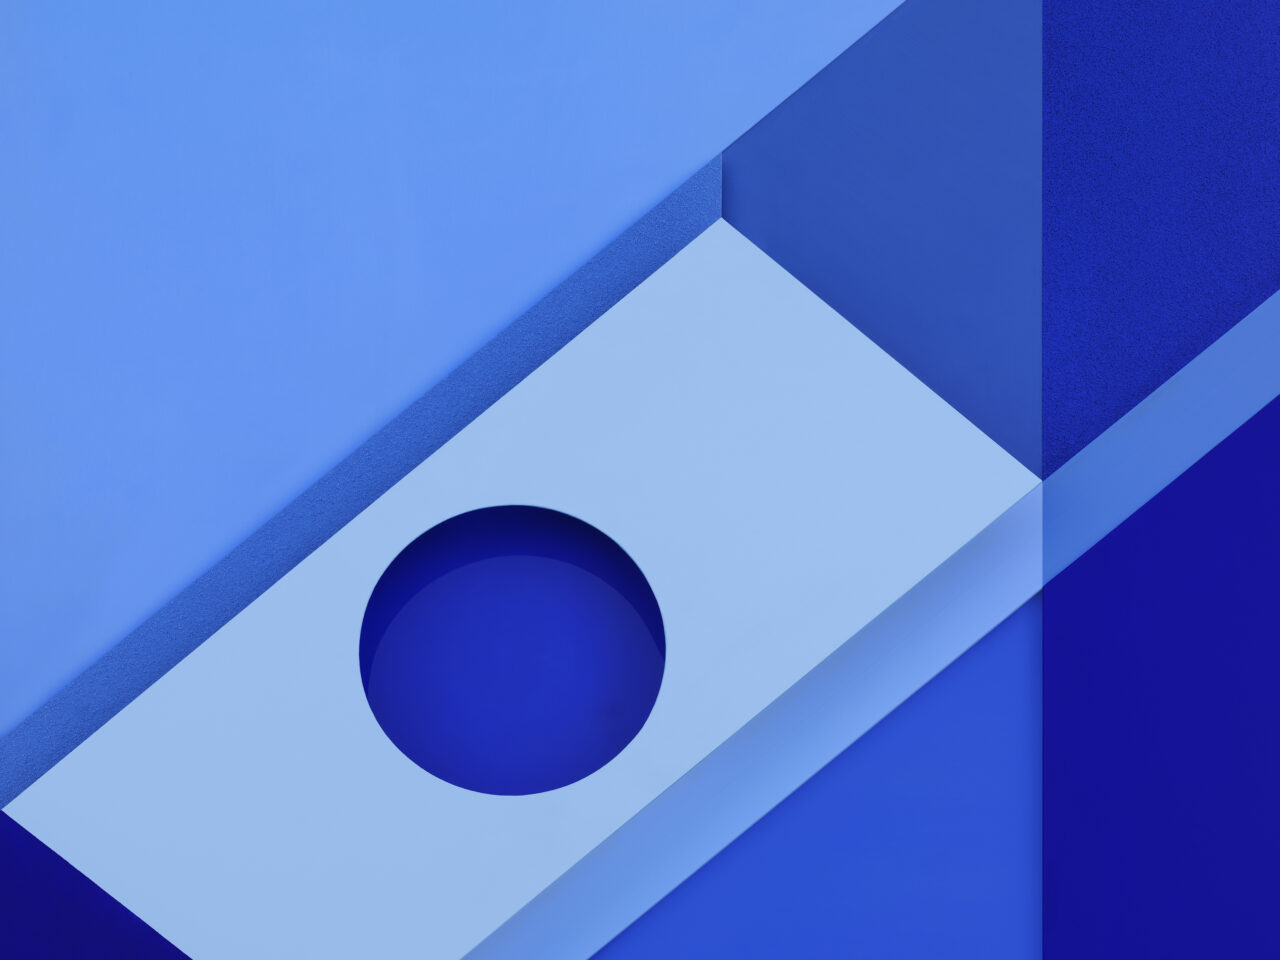 Google Android 6 0 Marshmallow の新たな壁紙2枚を公開 Jetstream Blog